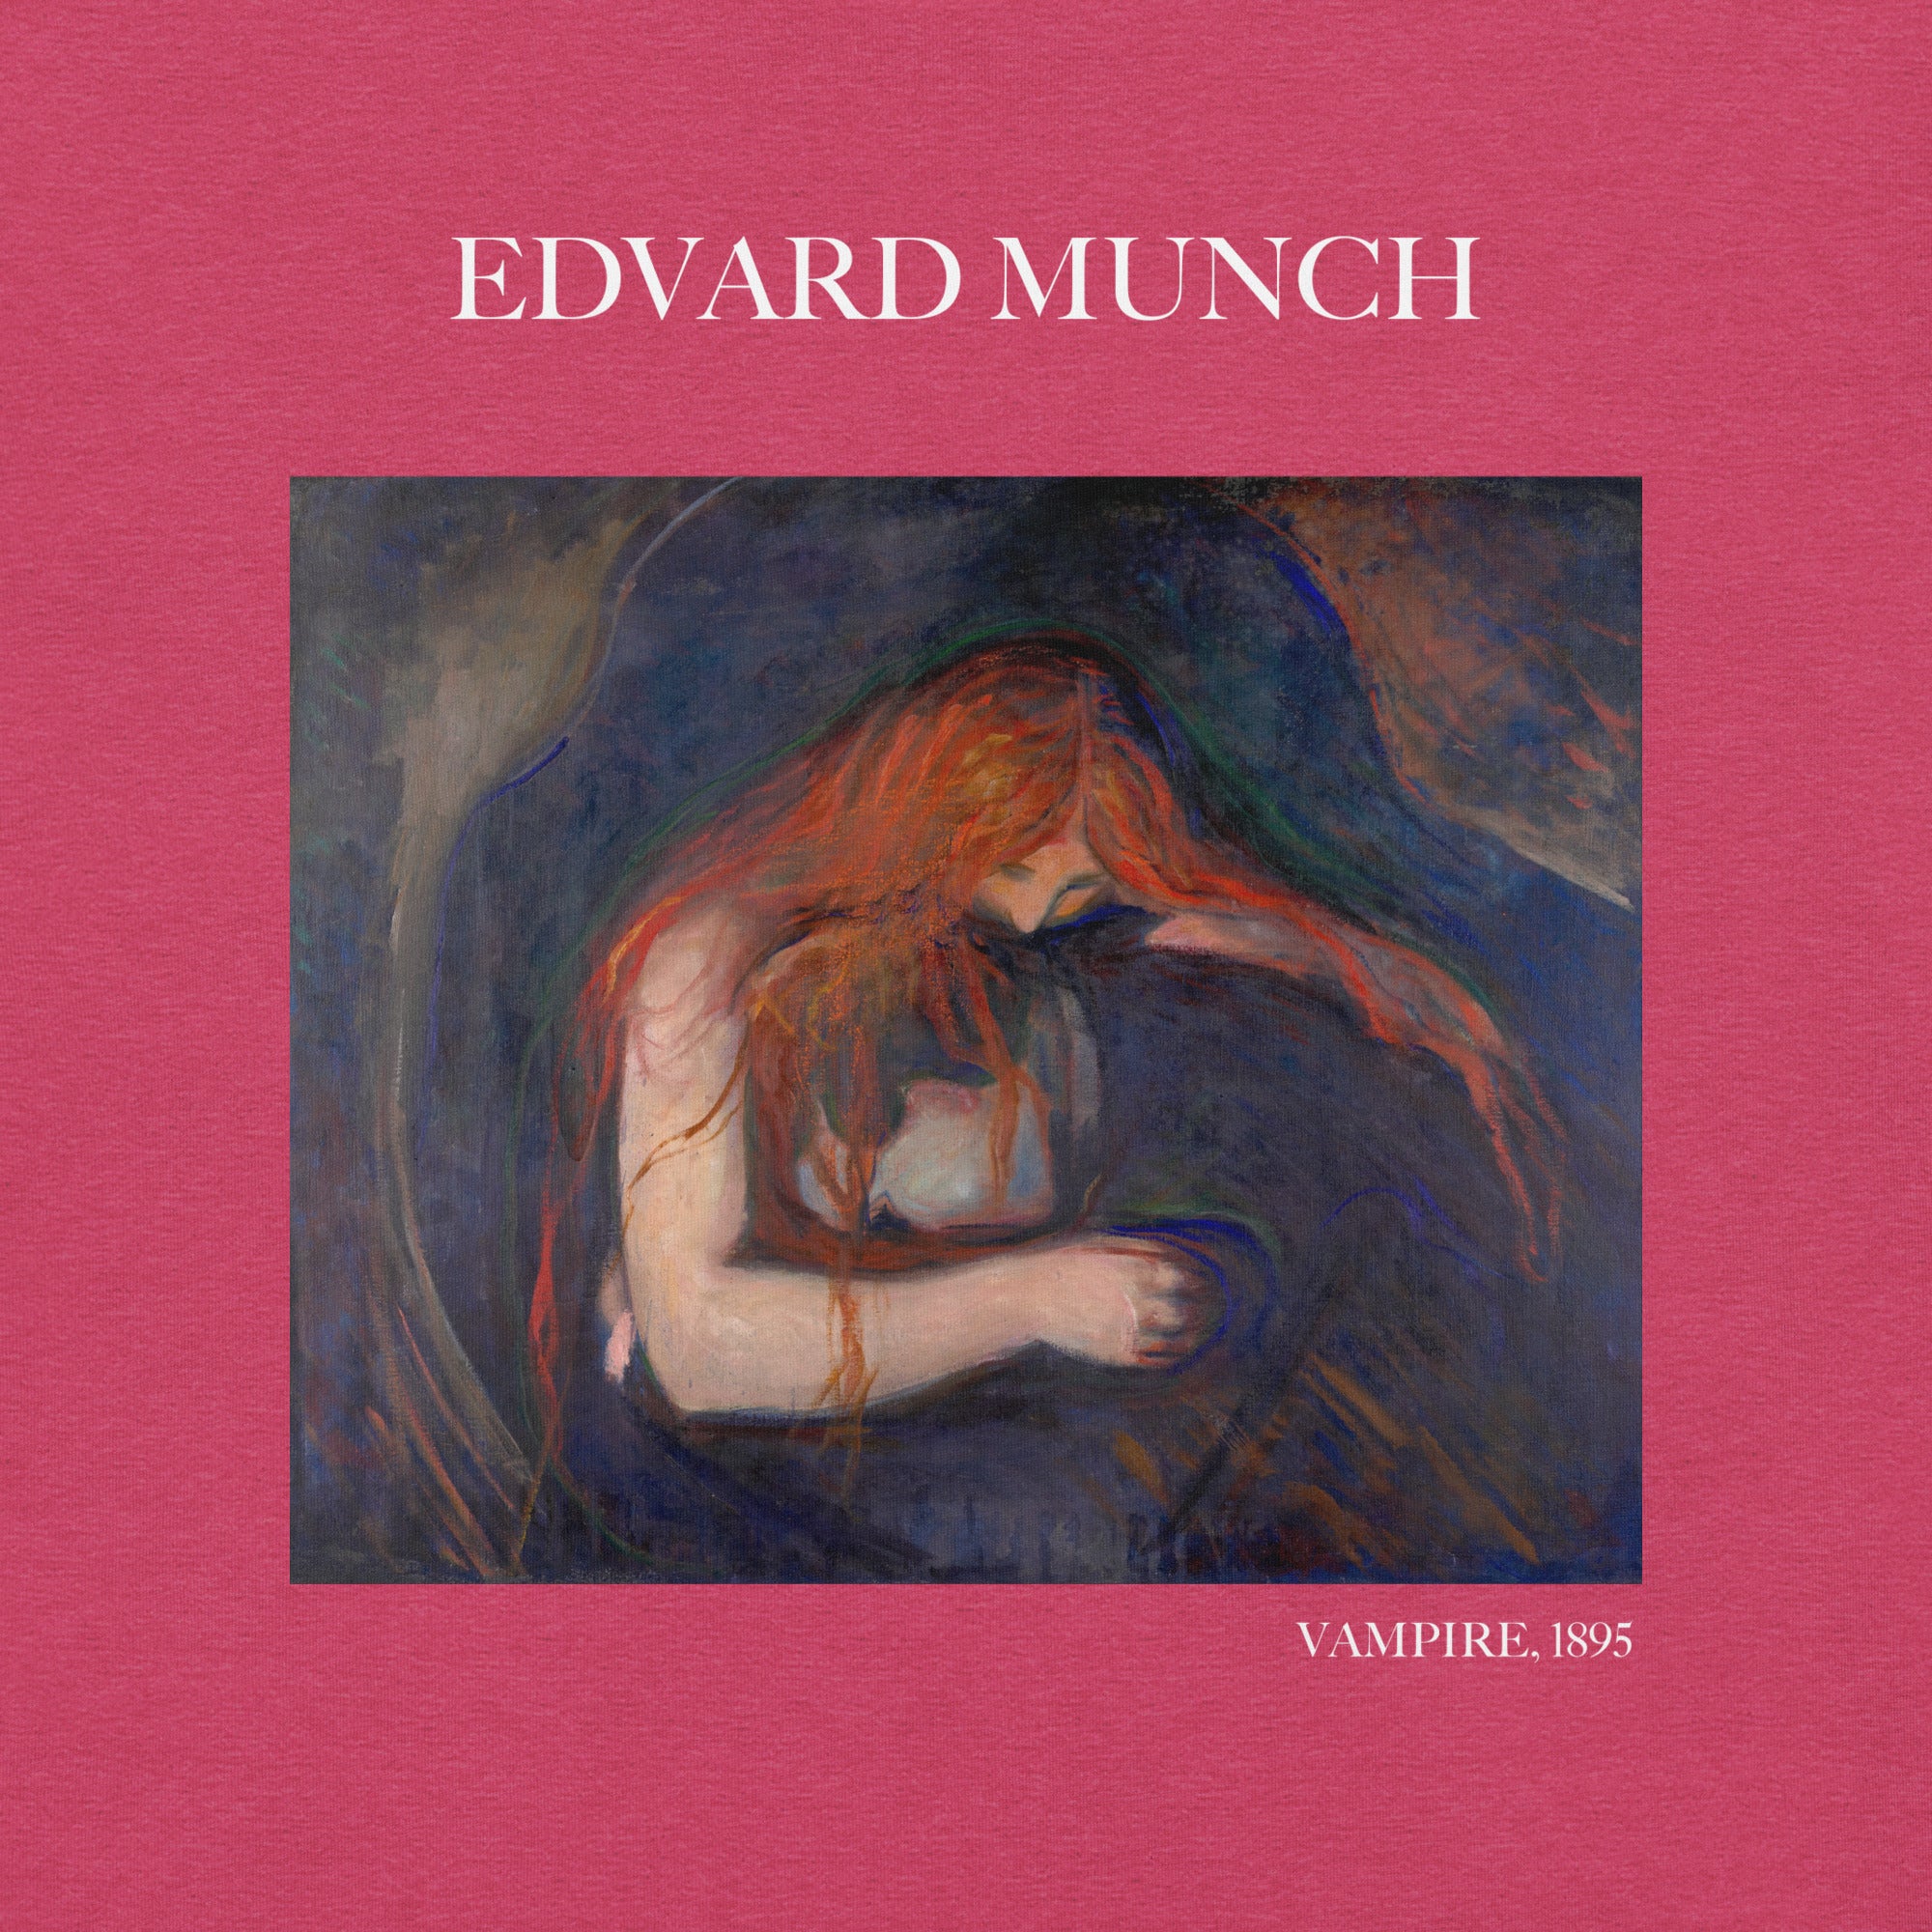 Edvard Munch 'Vampire' Famous Painting T-Shirt | Unisex Classic Art Tee